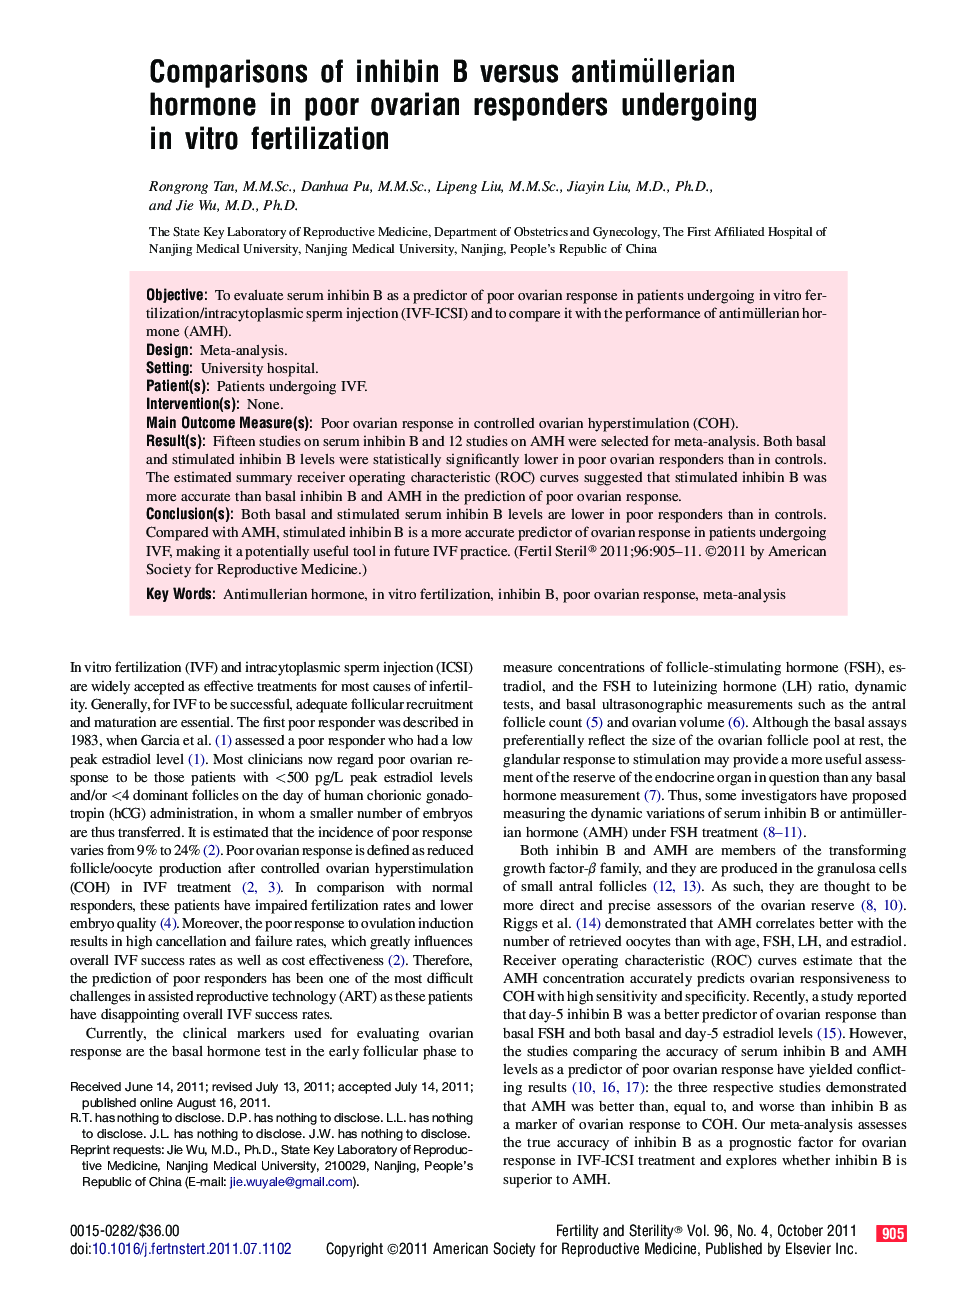 Comparisons of inhibin B versus antimüllerian hormone in poor ovarian responders undergoing inÂ vitro fertilization